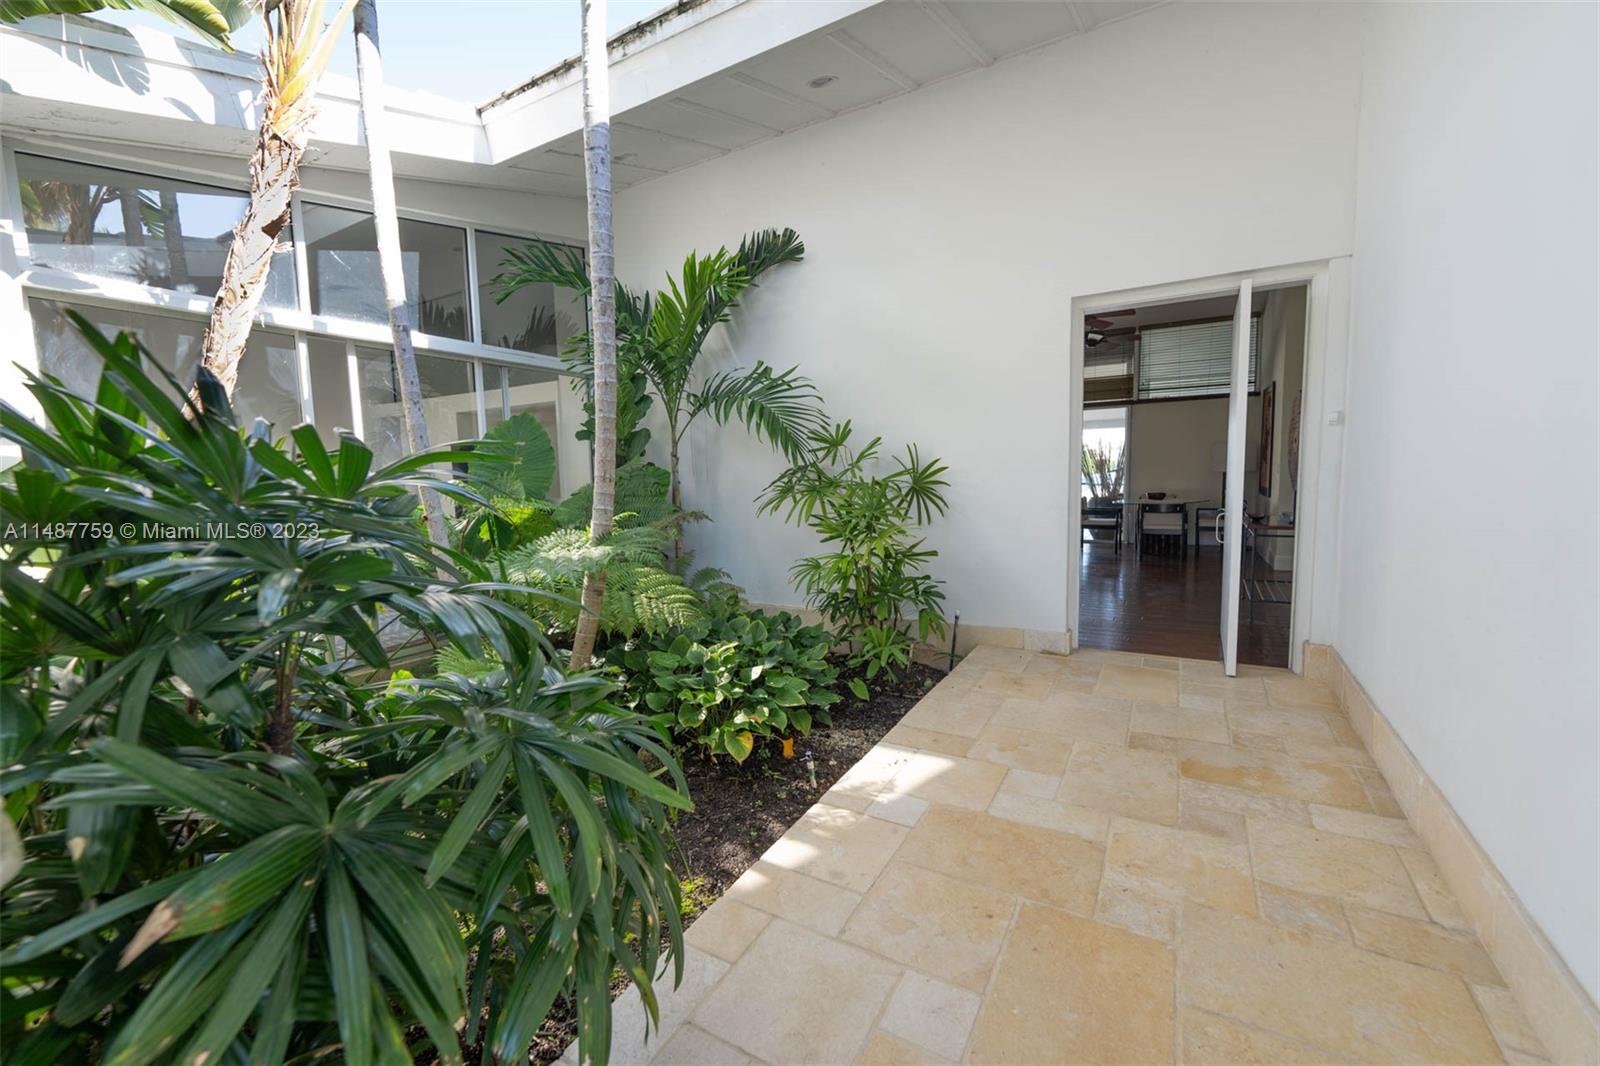 Rental Property at 591 N Mashta Dr, Key Biscayne, Miami-Dade County, Florida - Bedrooms: 4 
Bathrooms: 5  - $38,000 MO.